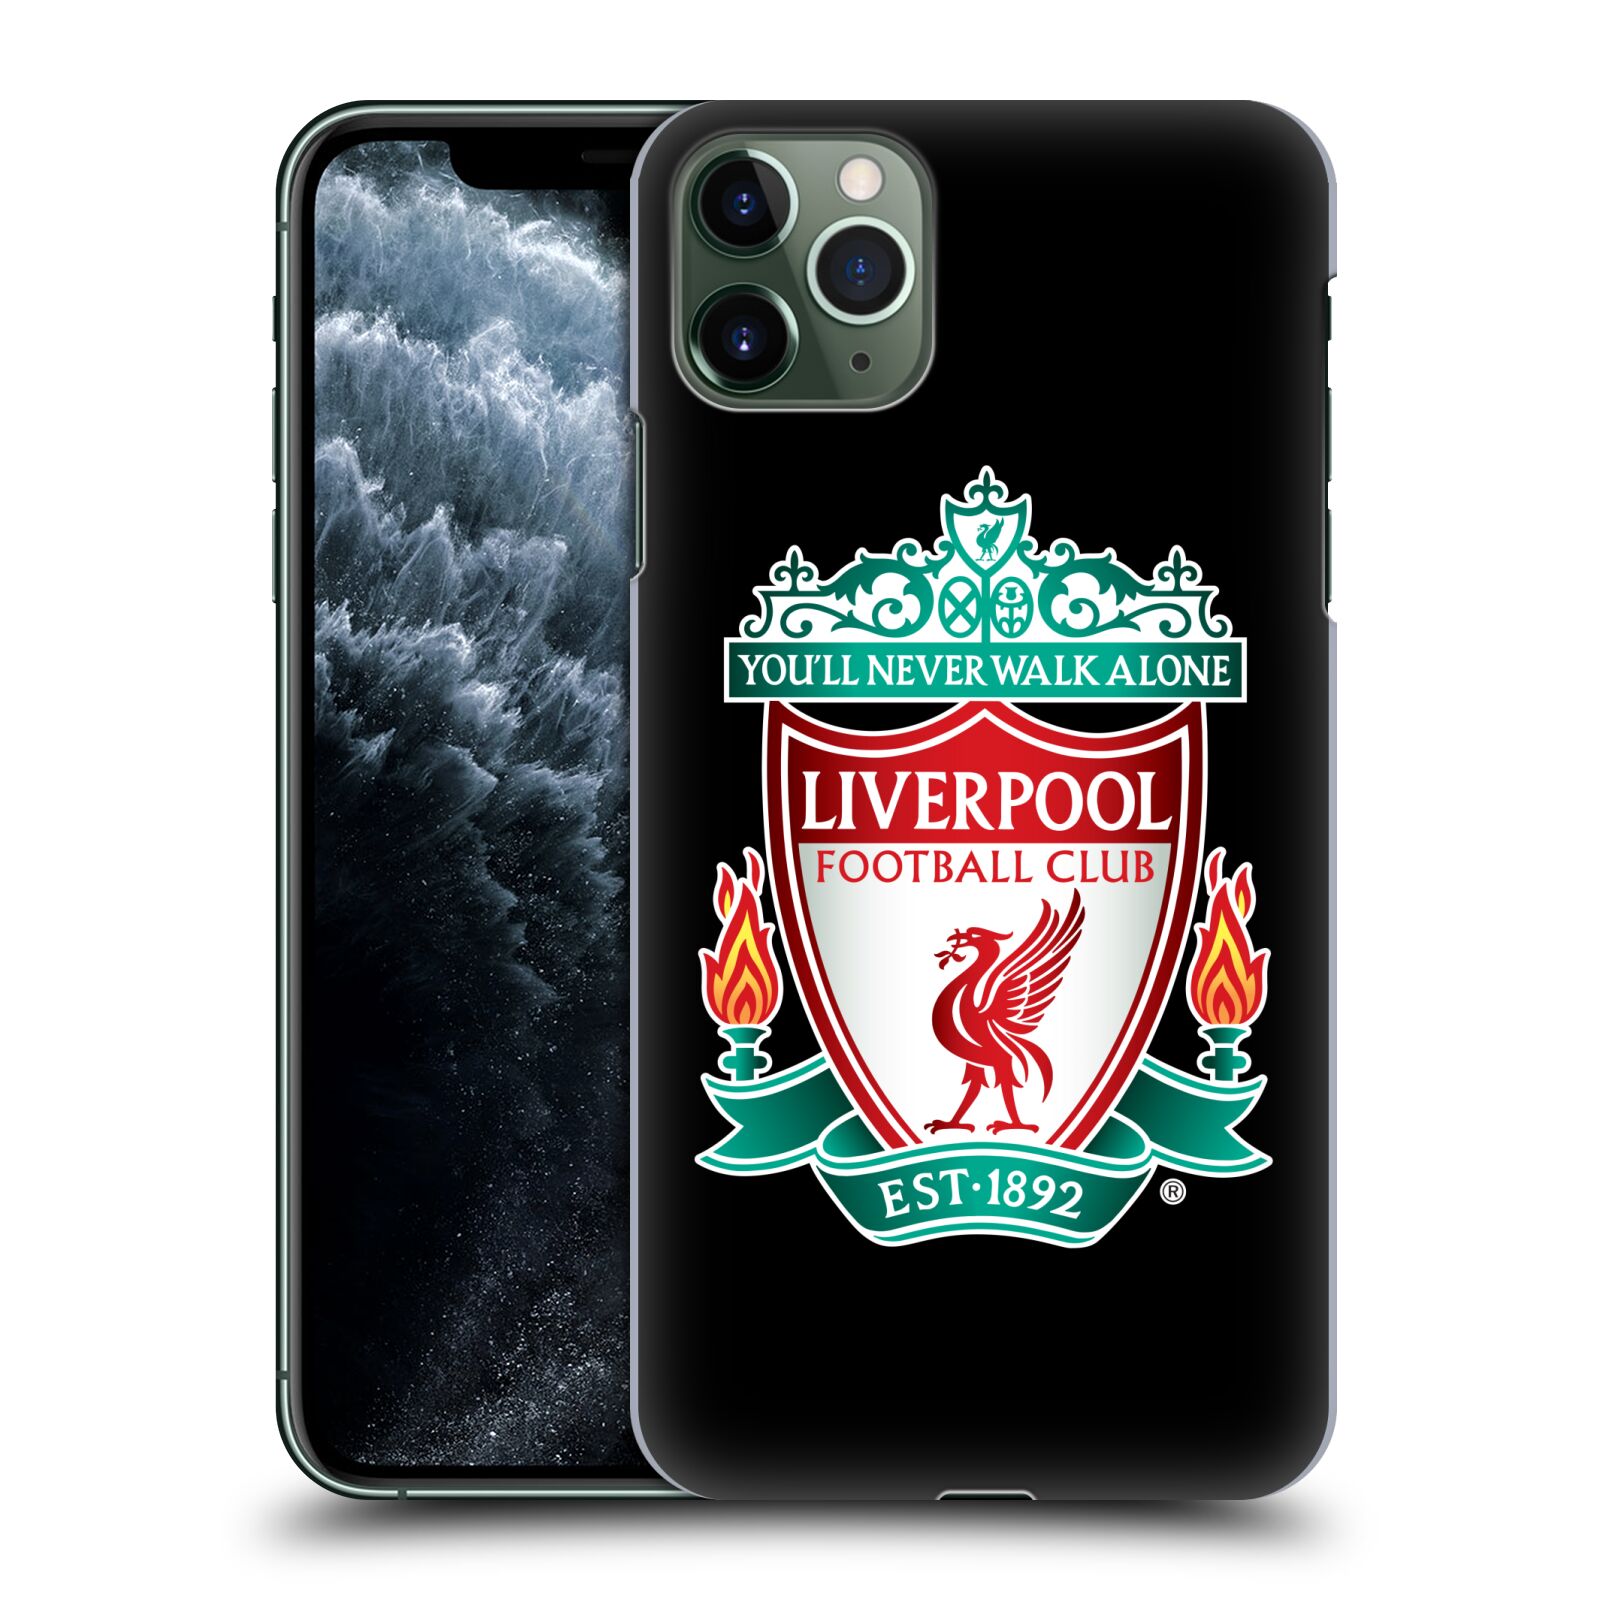 Pouzdro na mobil Apple Iphone 11 PRO MAX - HEAD CASE - Fotbalový klub Liverpool barevný znak černé pozadí